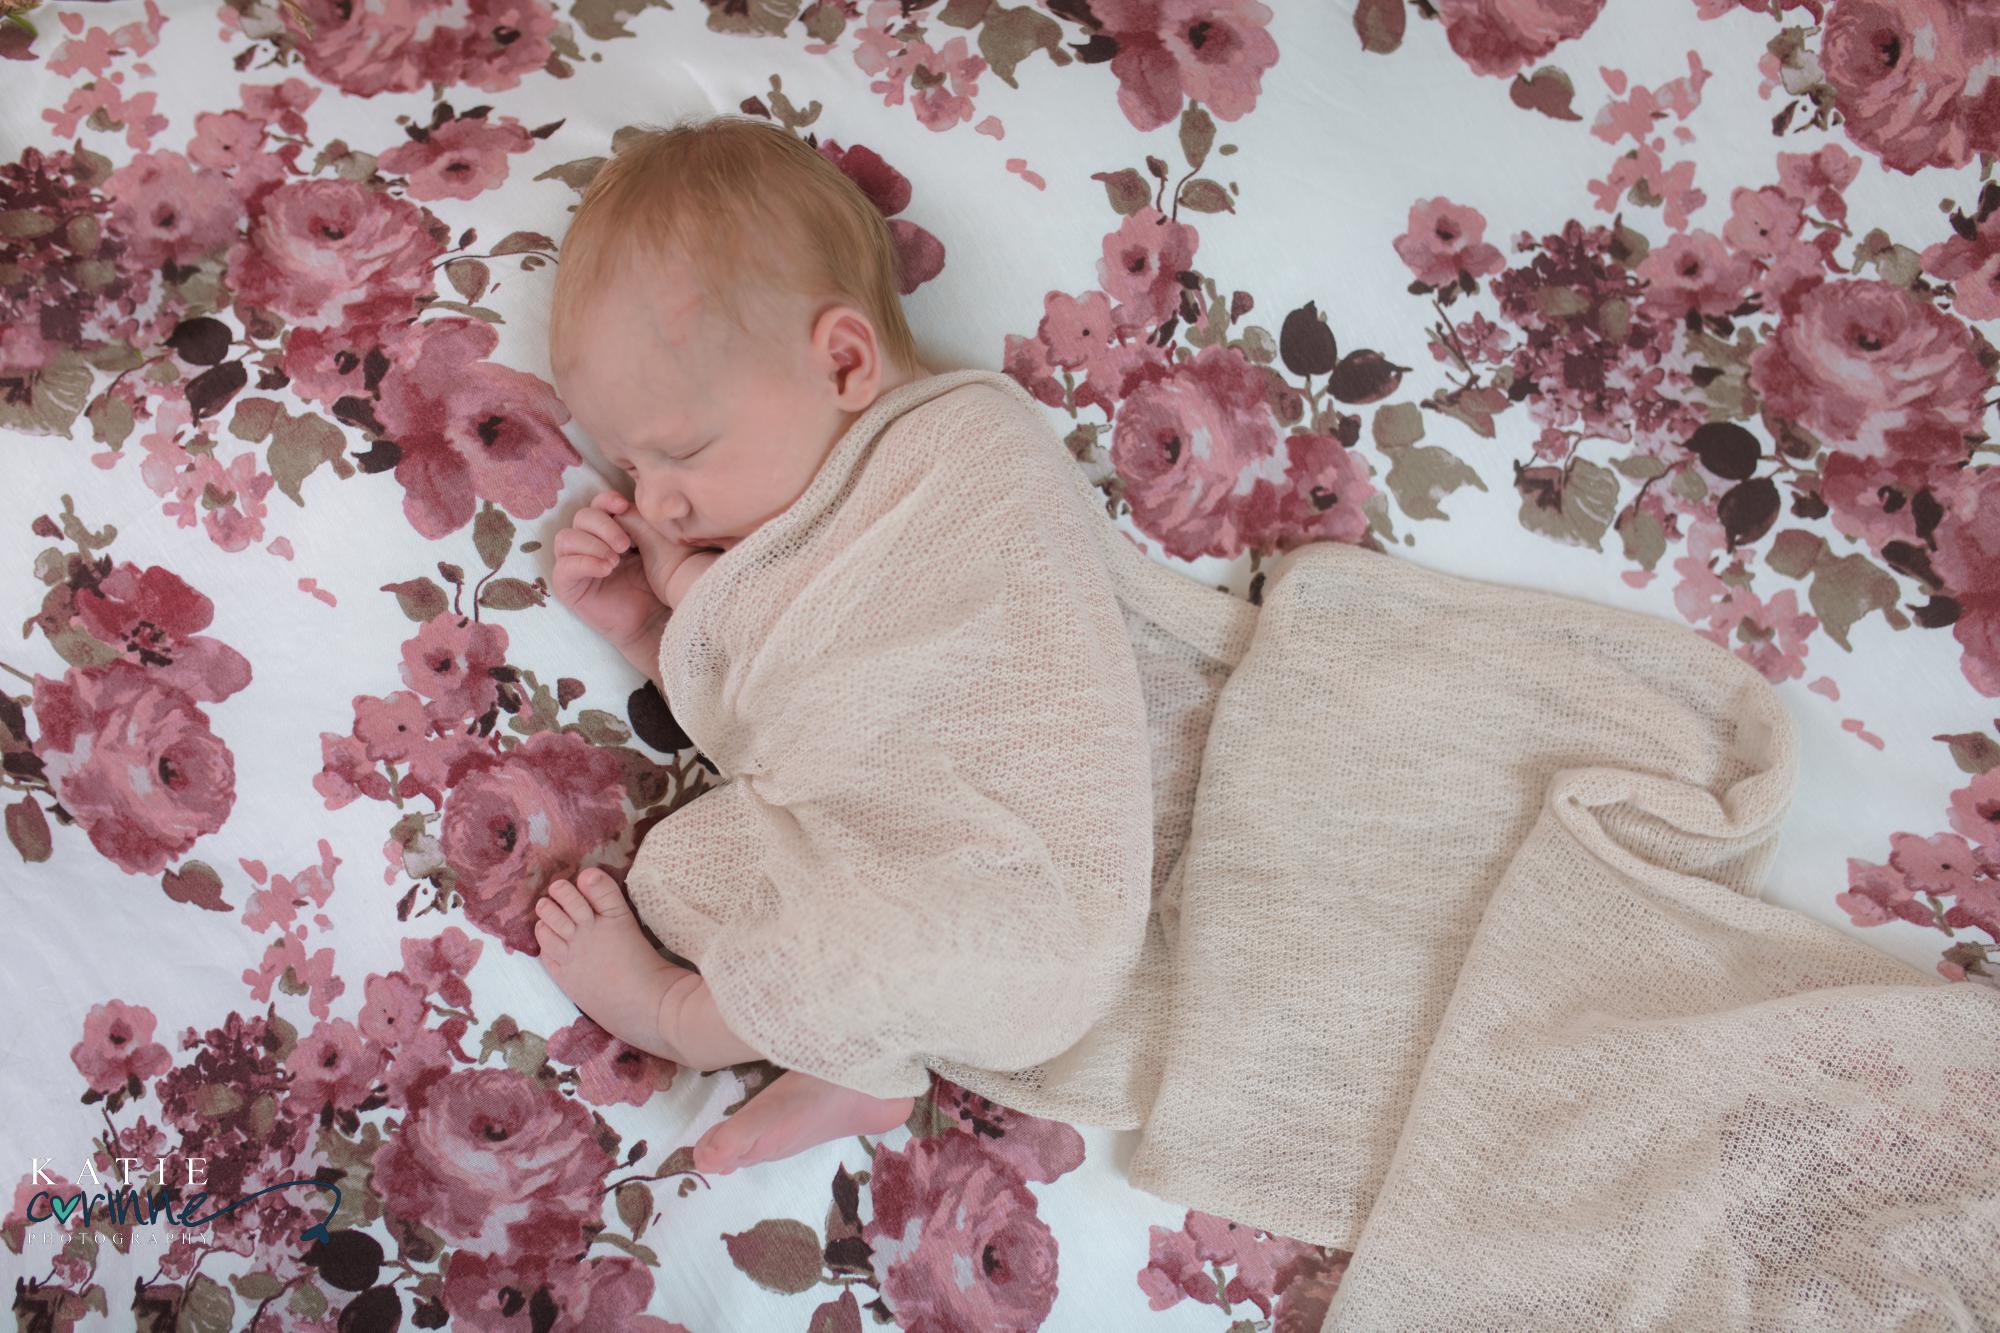 Destination newborn photographer poses baby girl